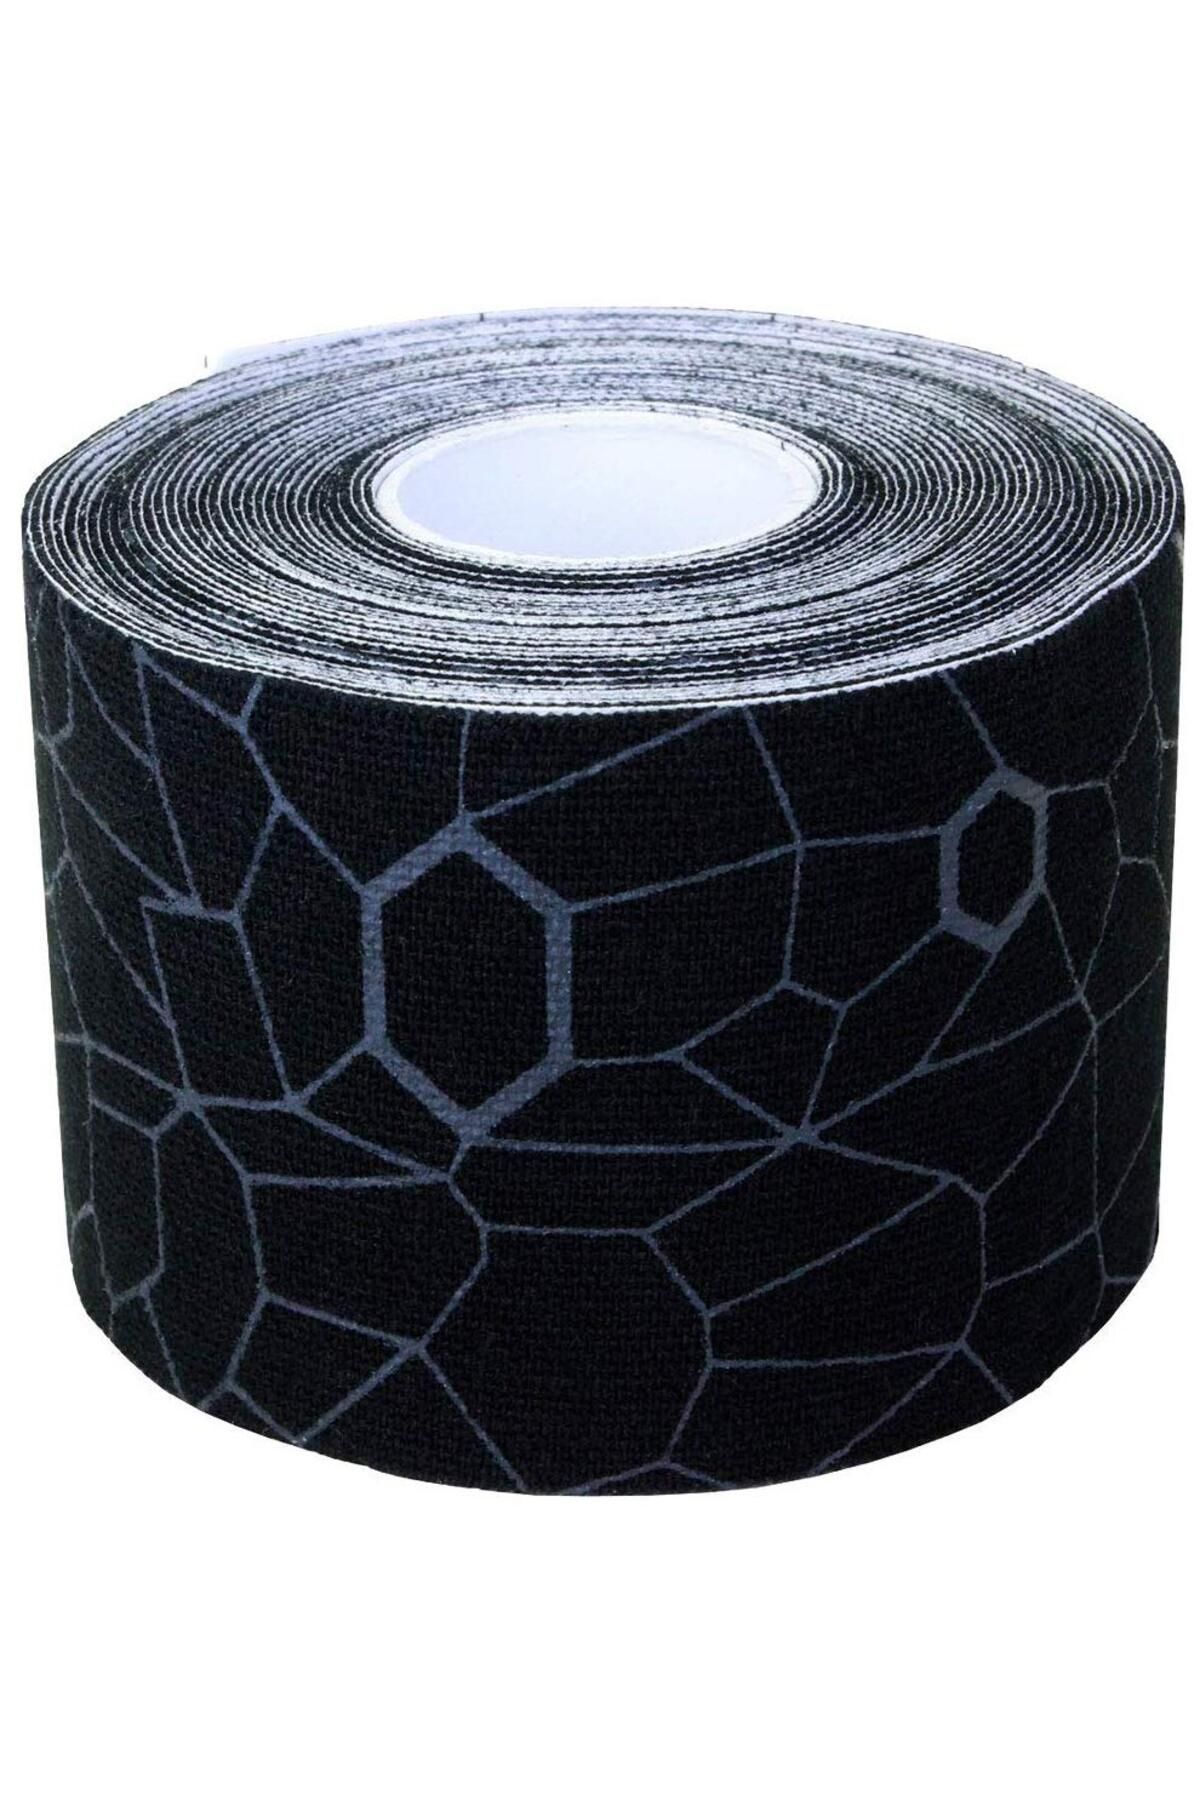 Theraband Kinesiology Tape Sporcu Bandı Ağrı Bandı 5cm x 5mt Siyah Zeminde Gri Çizgili